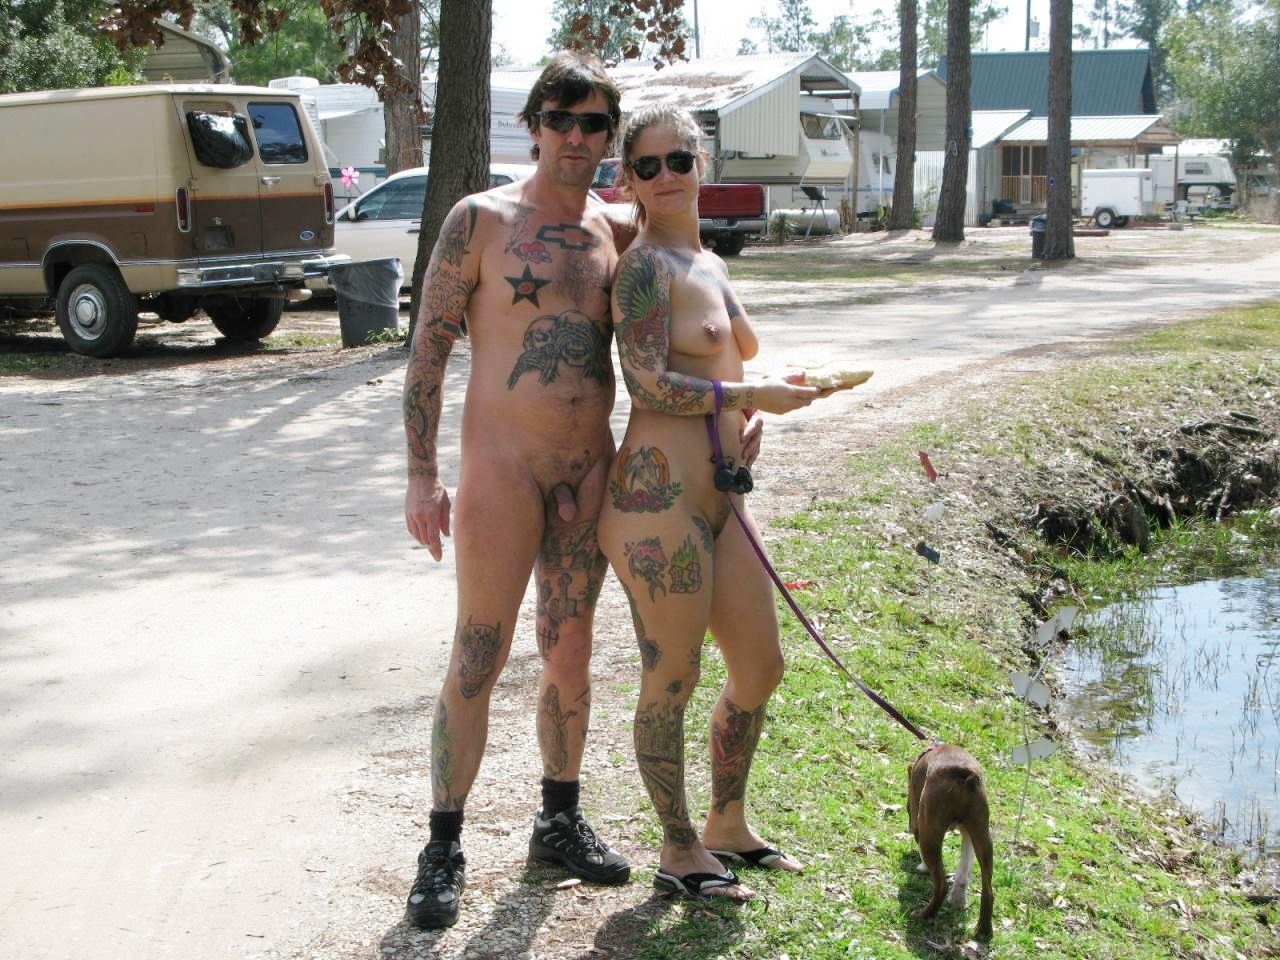 https://www.nudismlife.com/galleries/nudists_and_nude/nudists_couple/nudists_nude_naturists_couple_2153.jpg